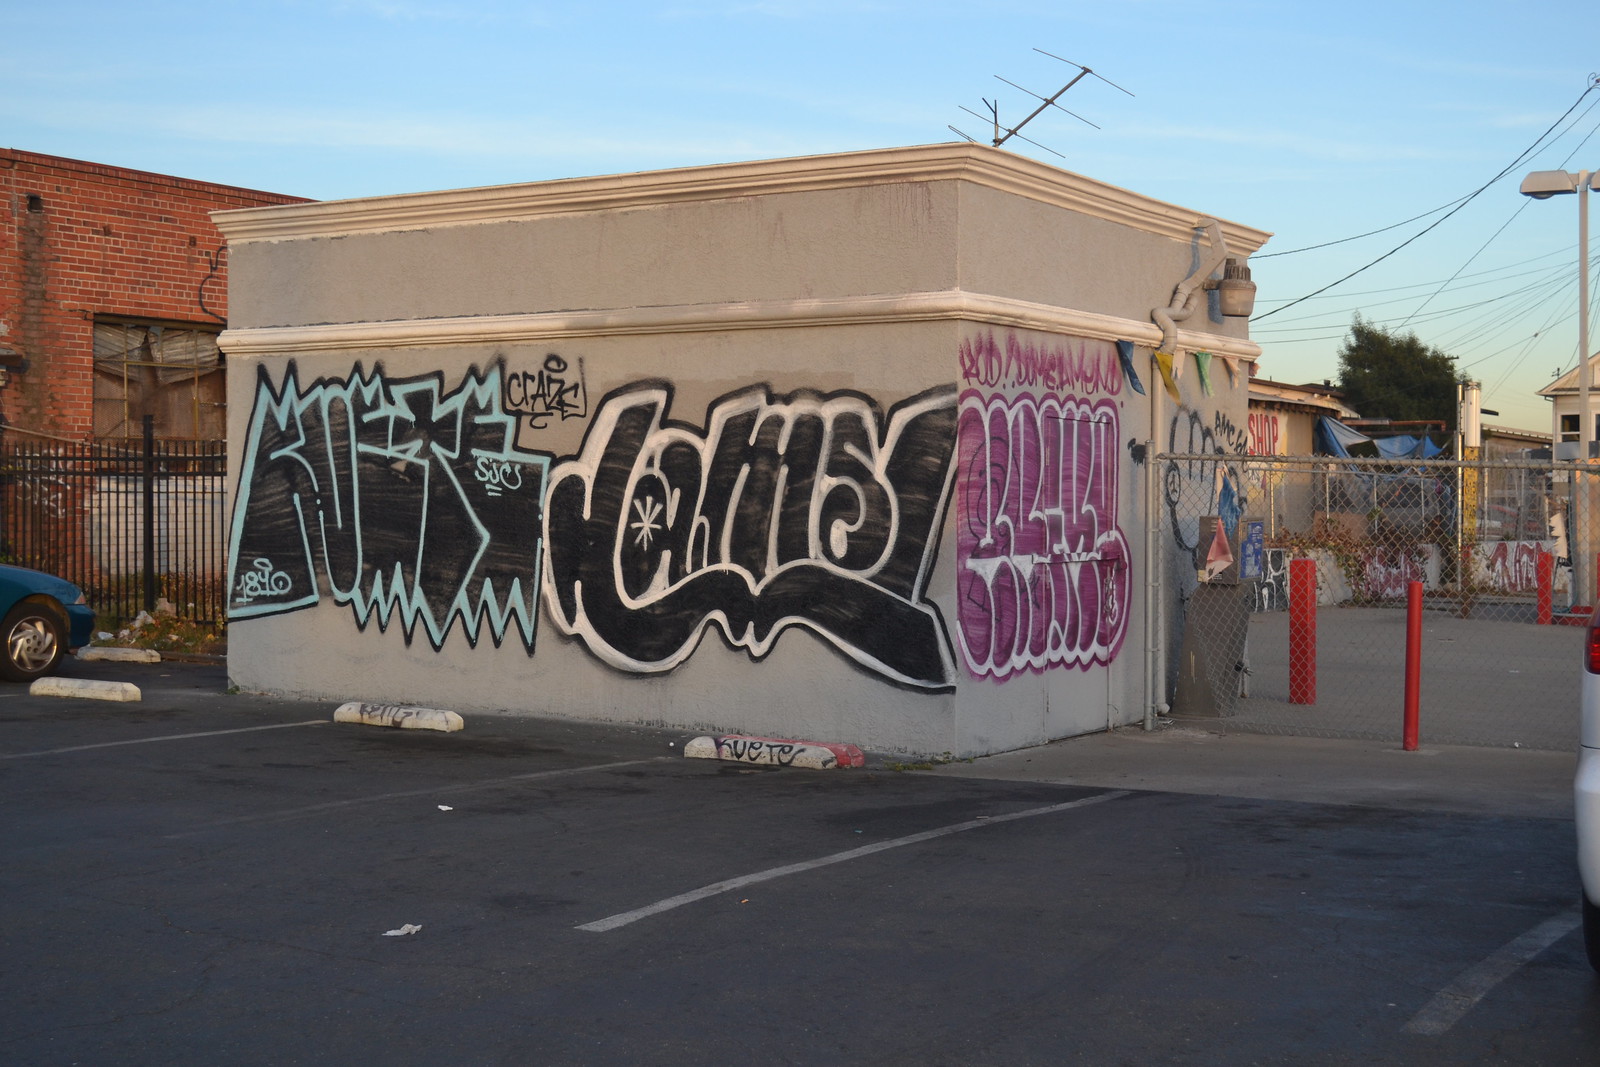 KUETE, DAMSEL, KRIME, KOD, DDD, 640, Graffiti, Street Art, Oakland